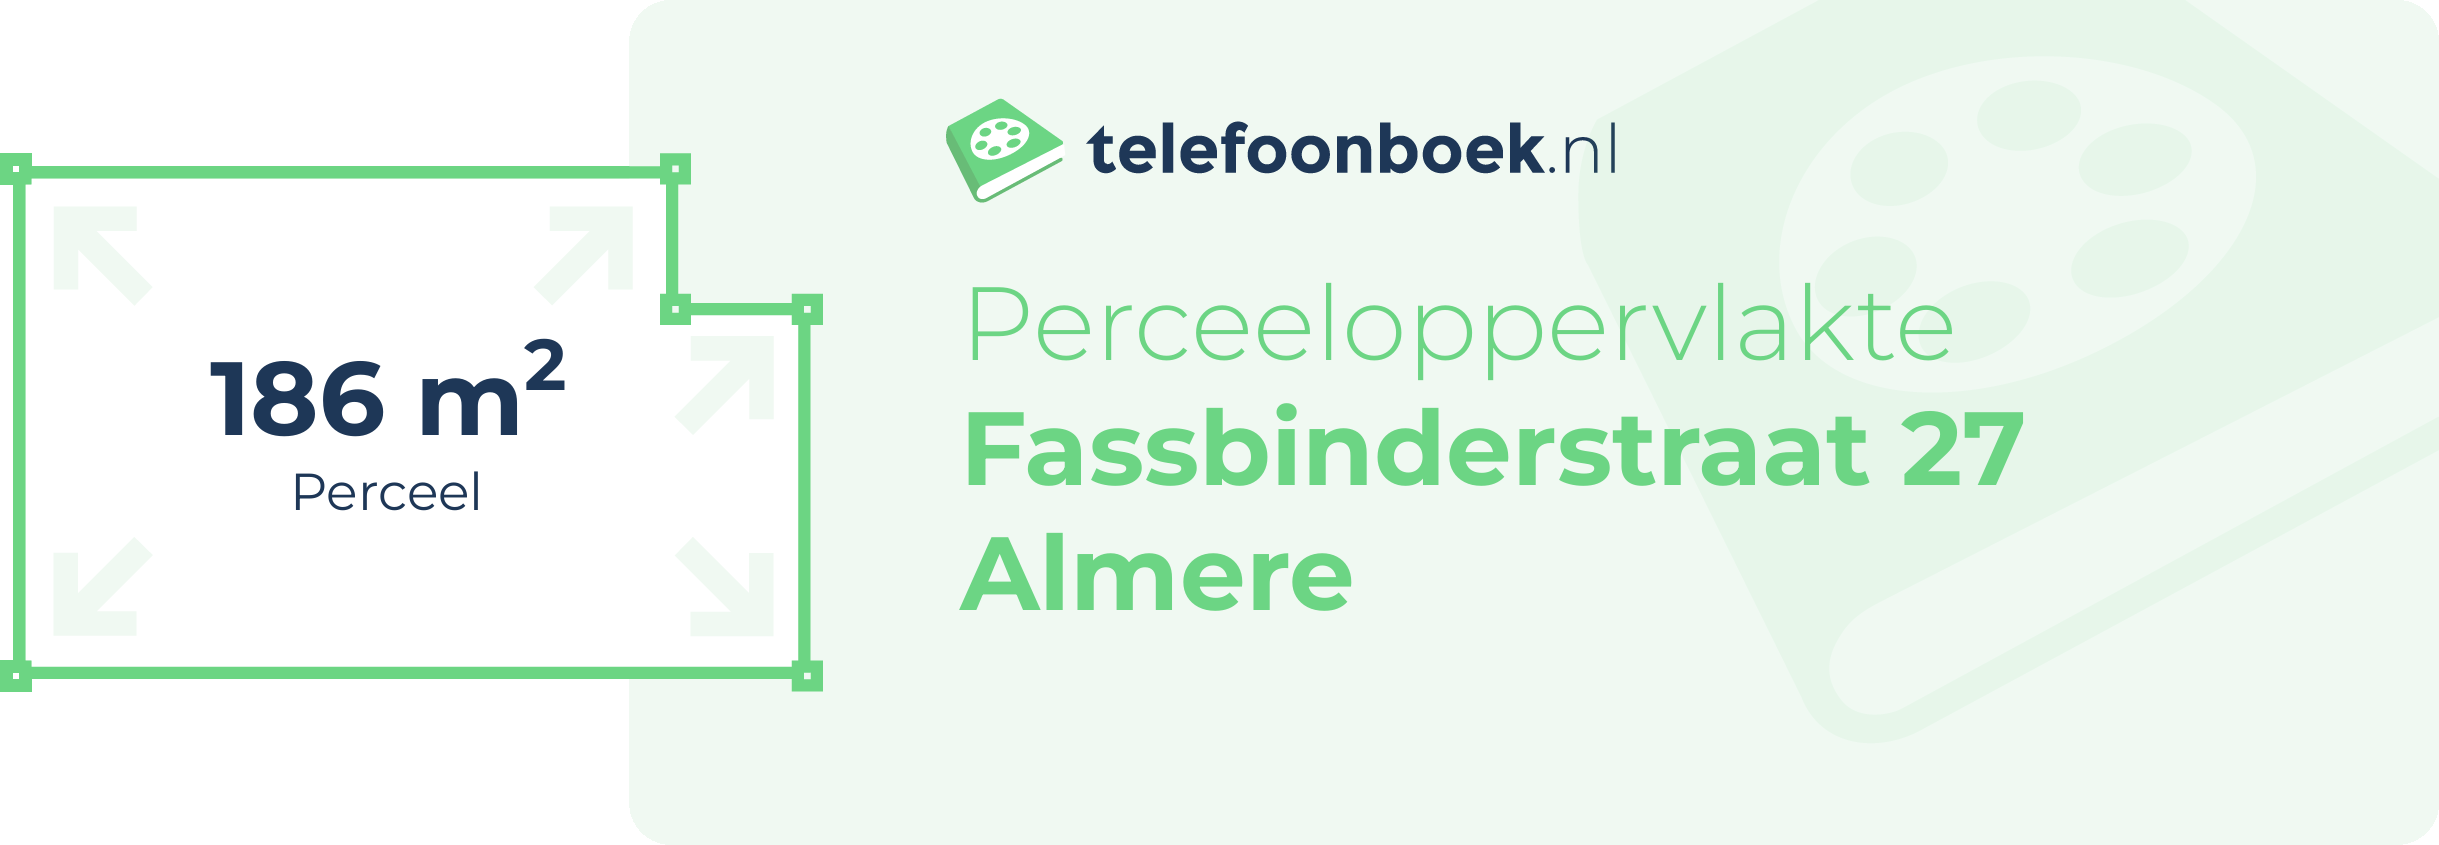 Perceeloppervlakte Fassbinderstraat 27 Almere